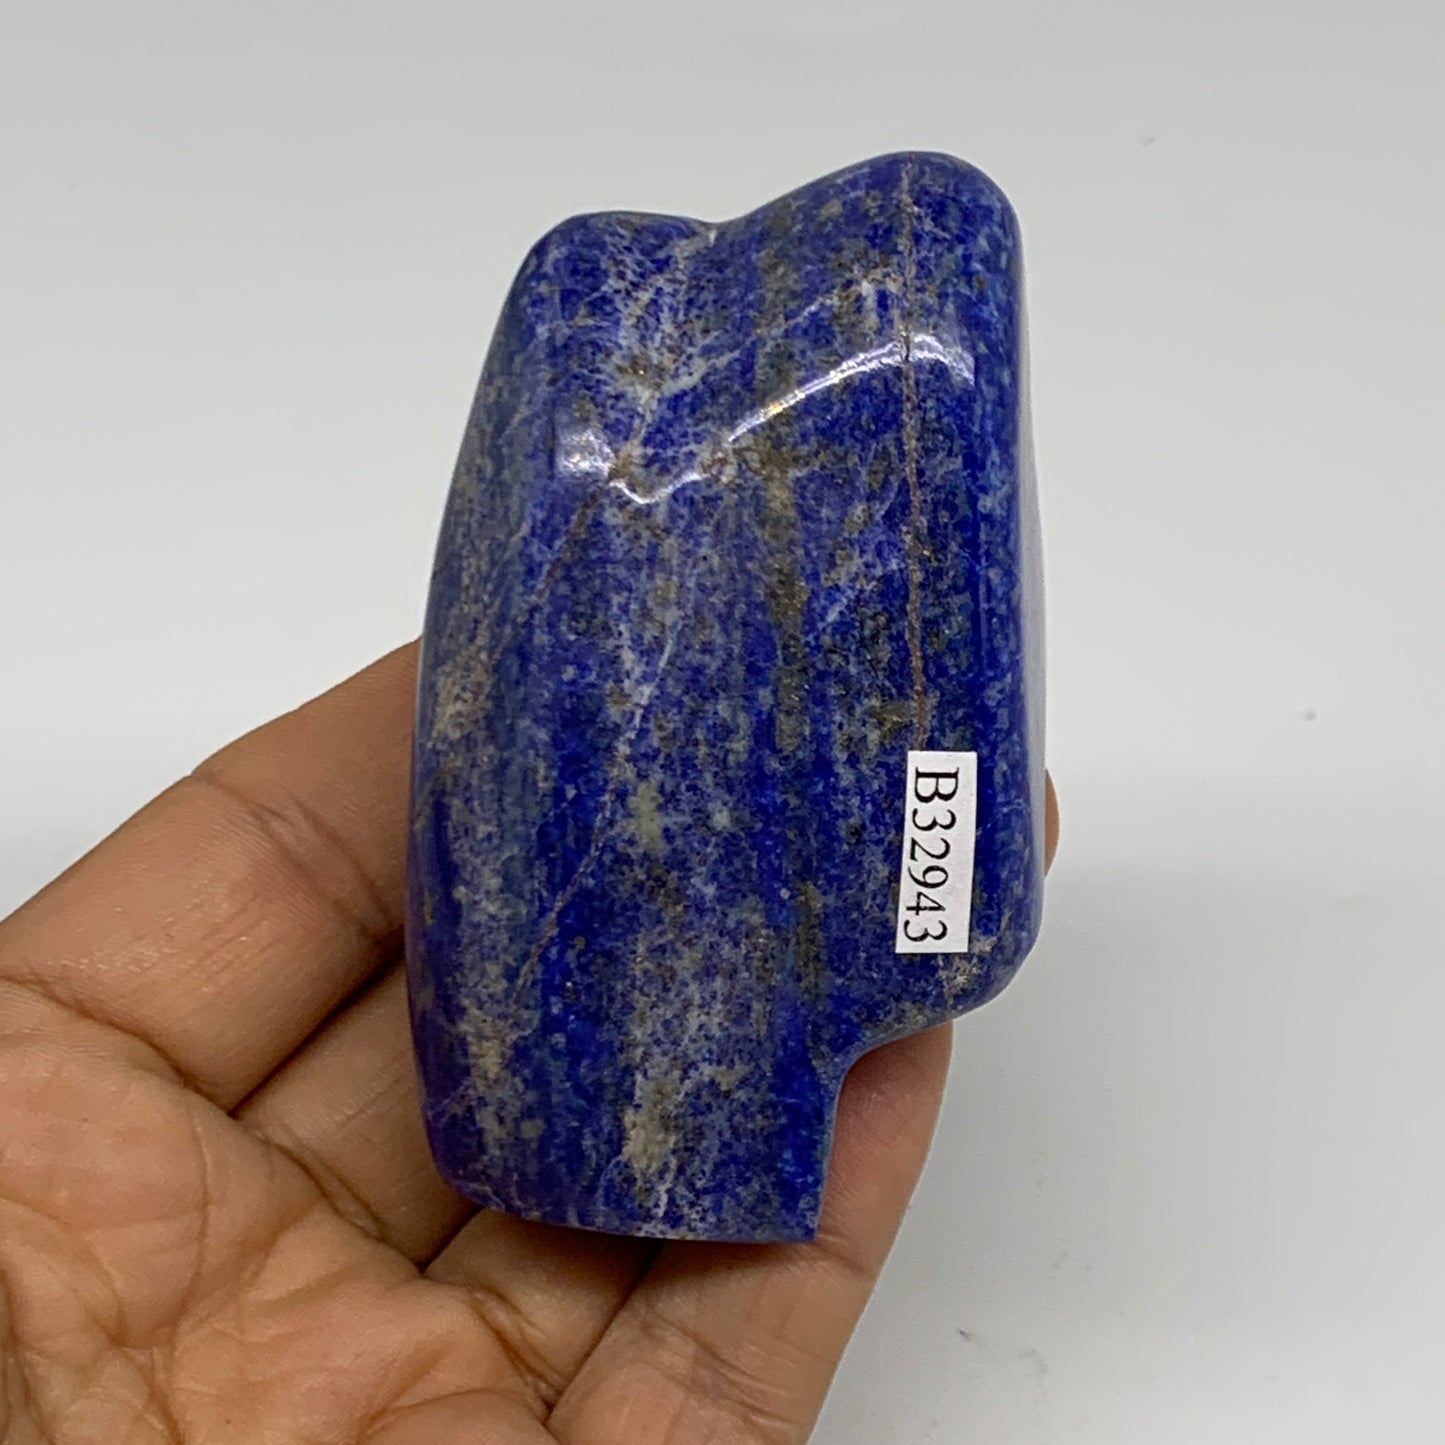 190g, 2.9"x1.6"x1.7", Natural Freeform Lapis Lazuli from Afghanistan, B32943